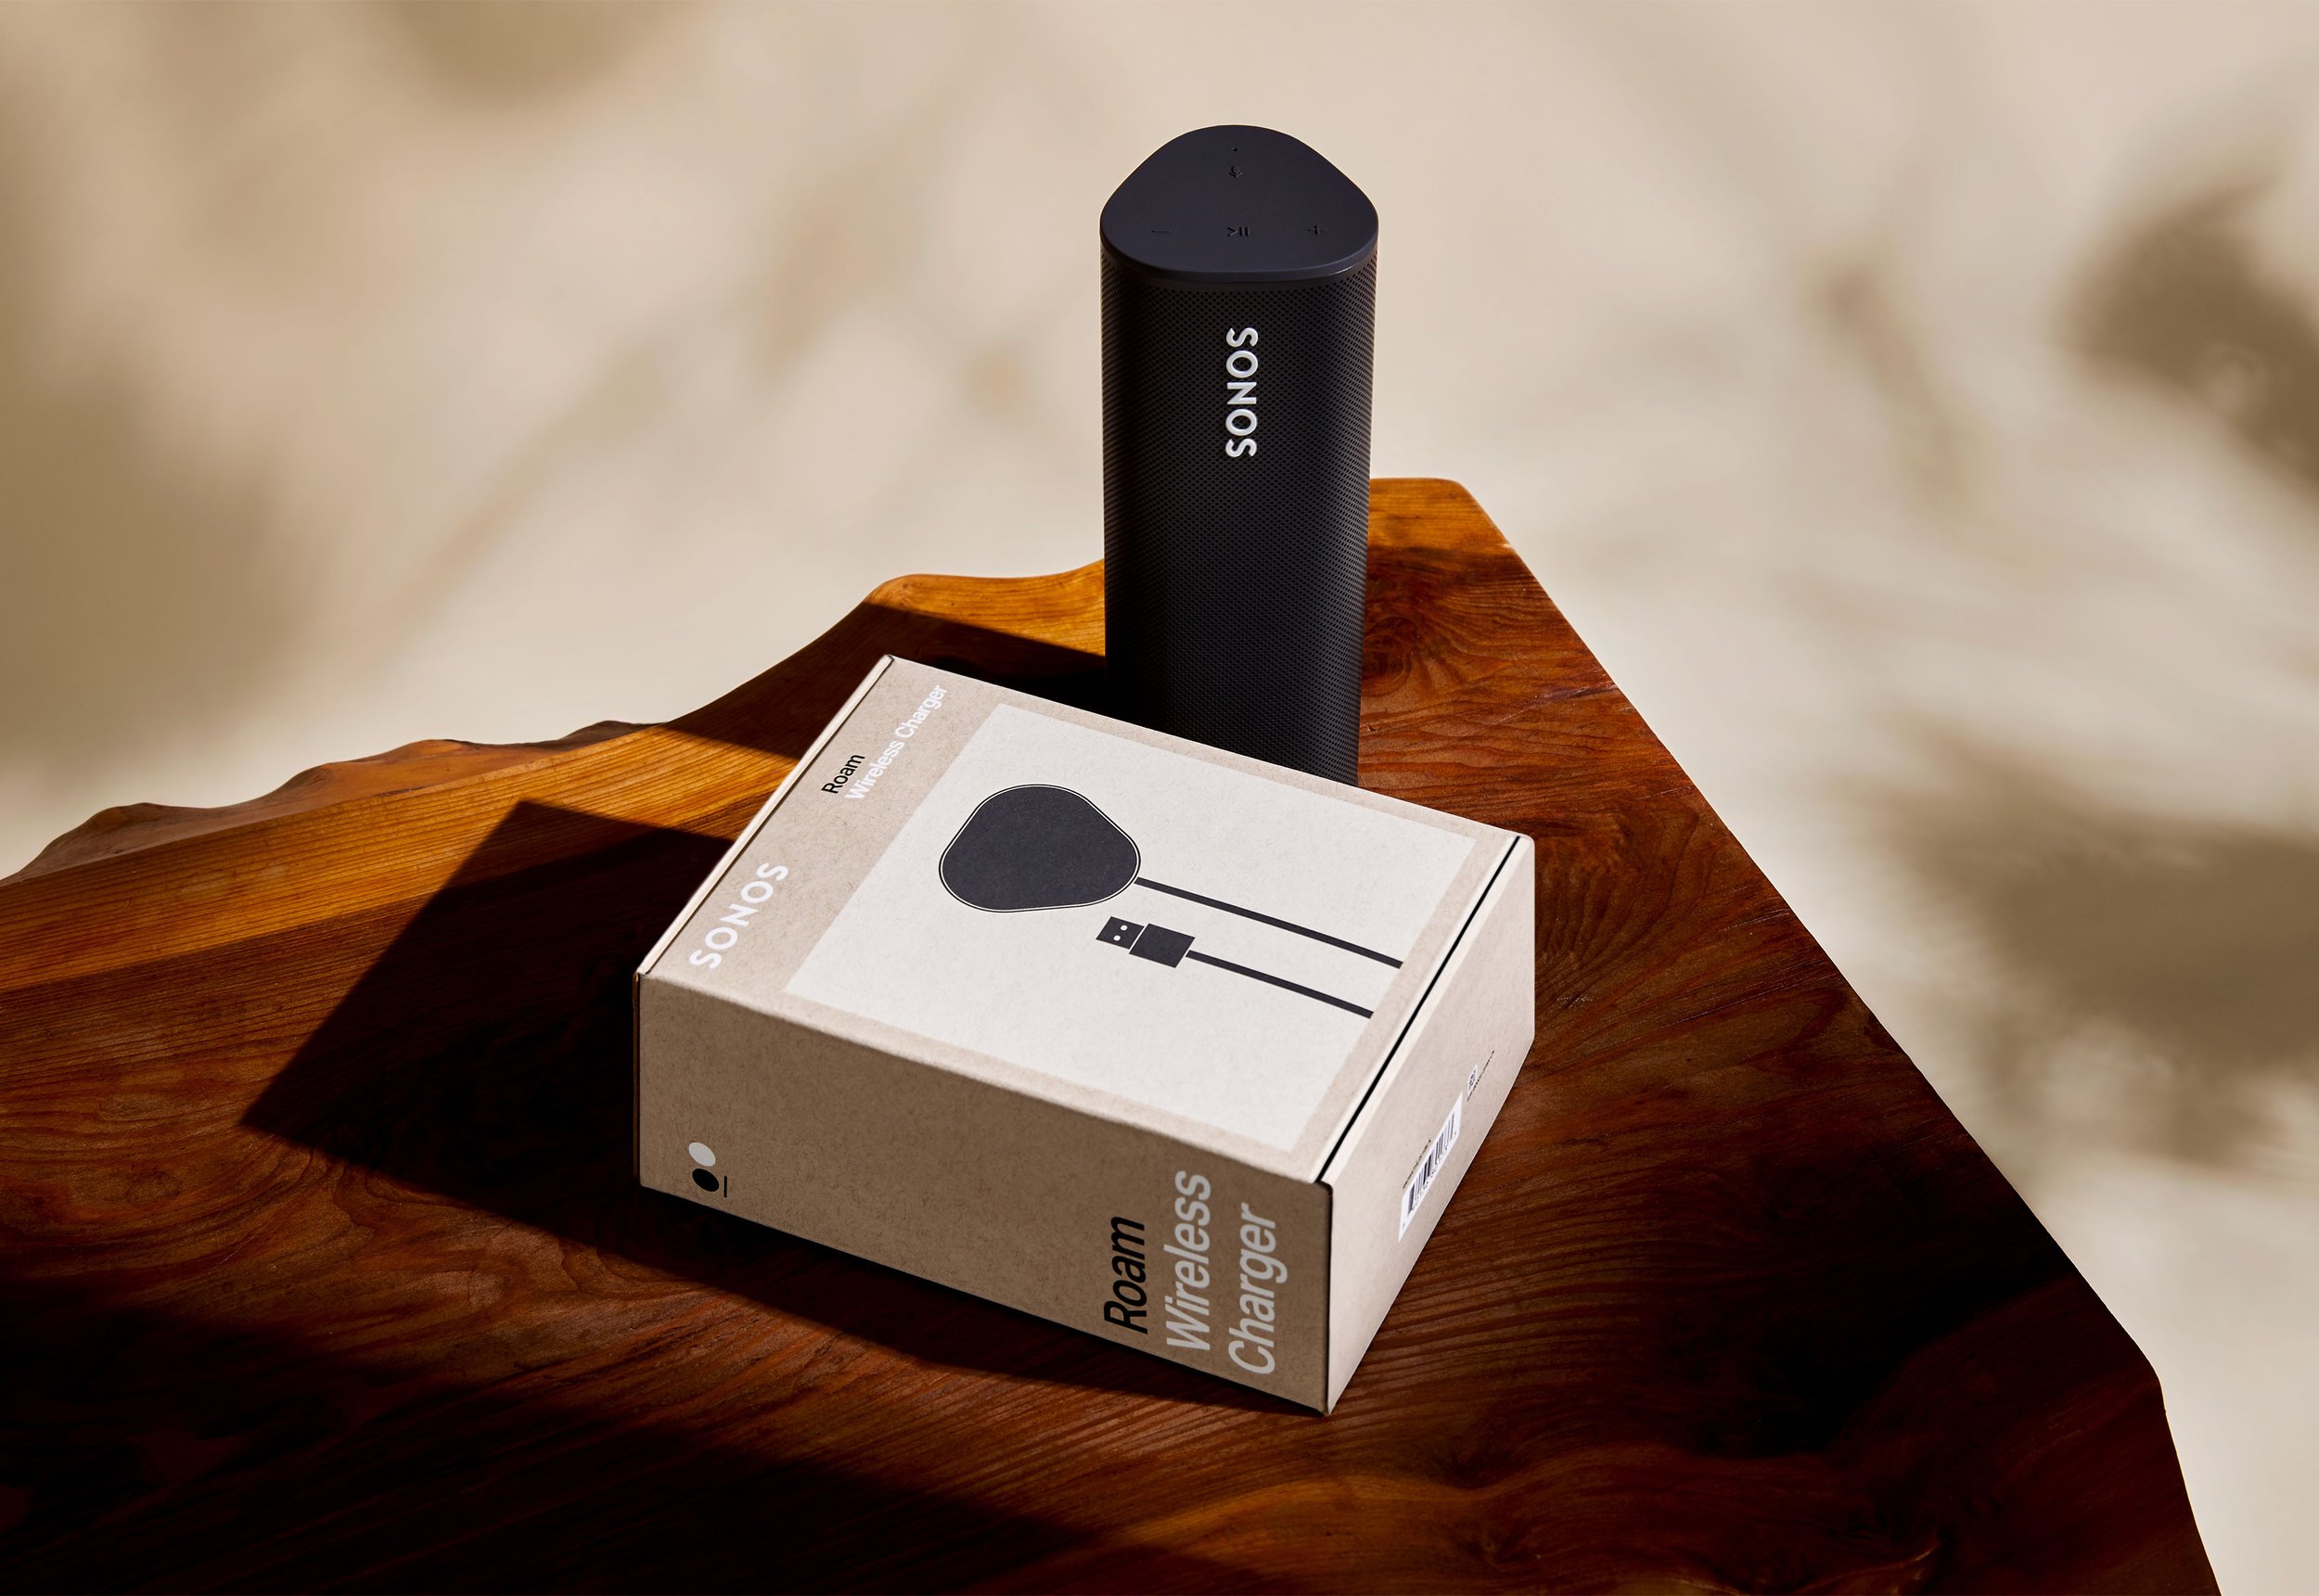 Sonos Accessories Packaging WARD